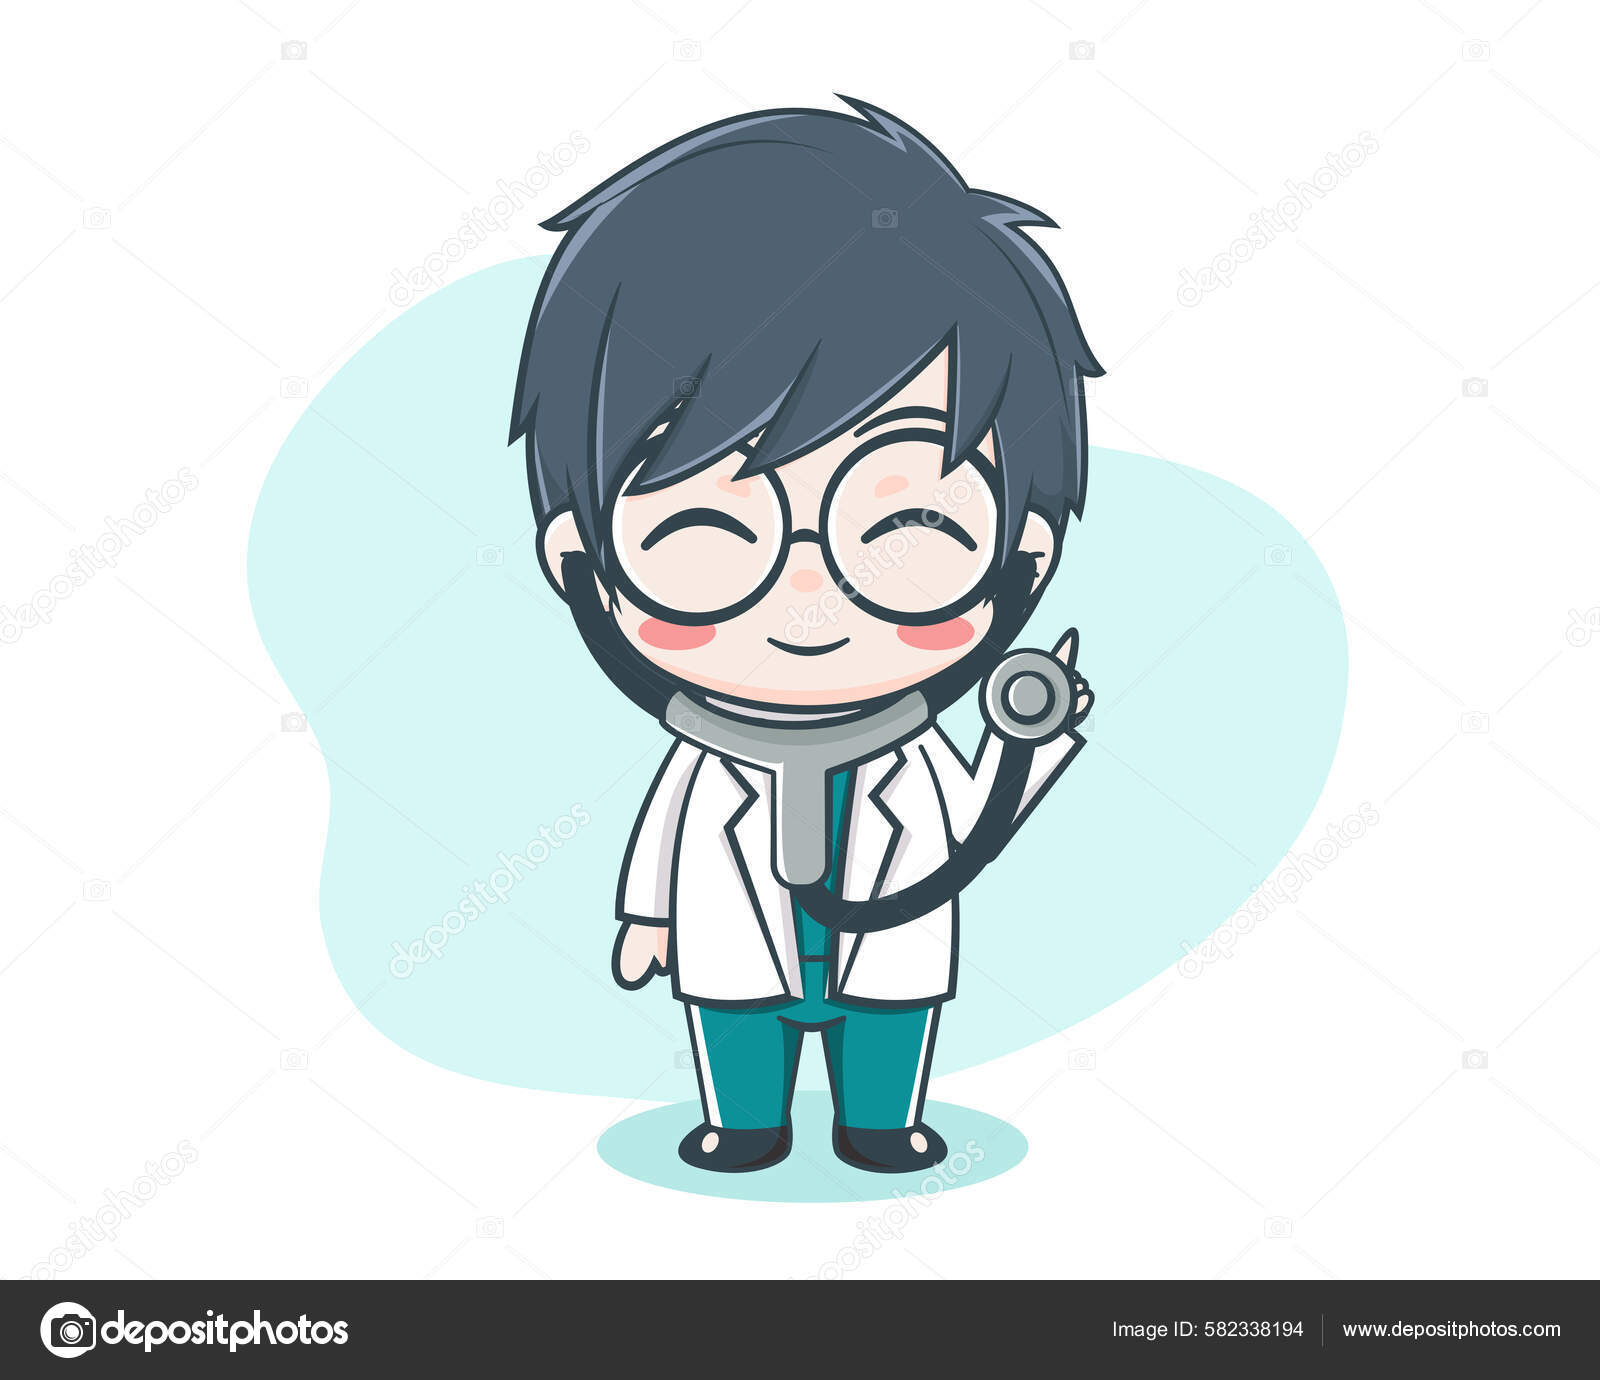 doctor who cute cartoon